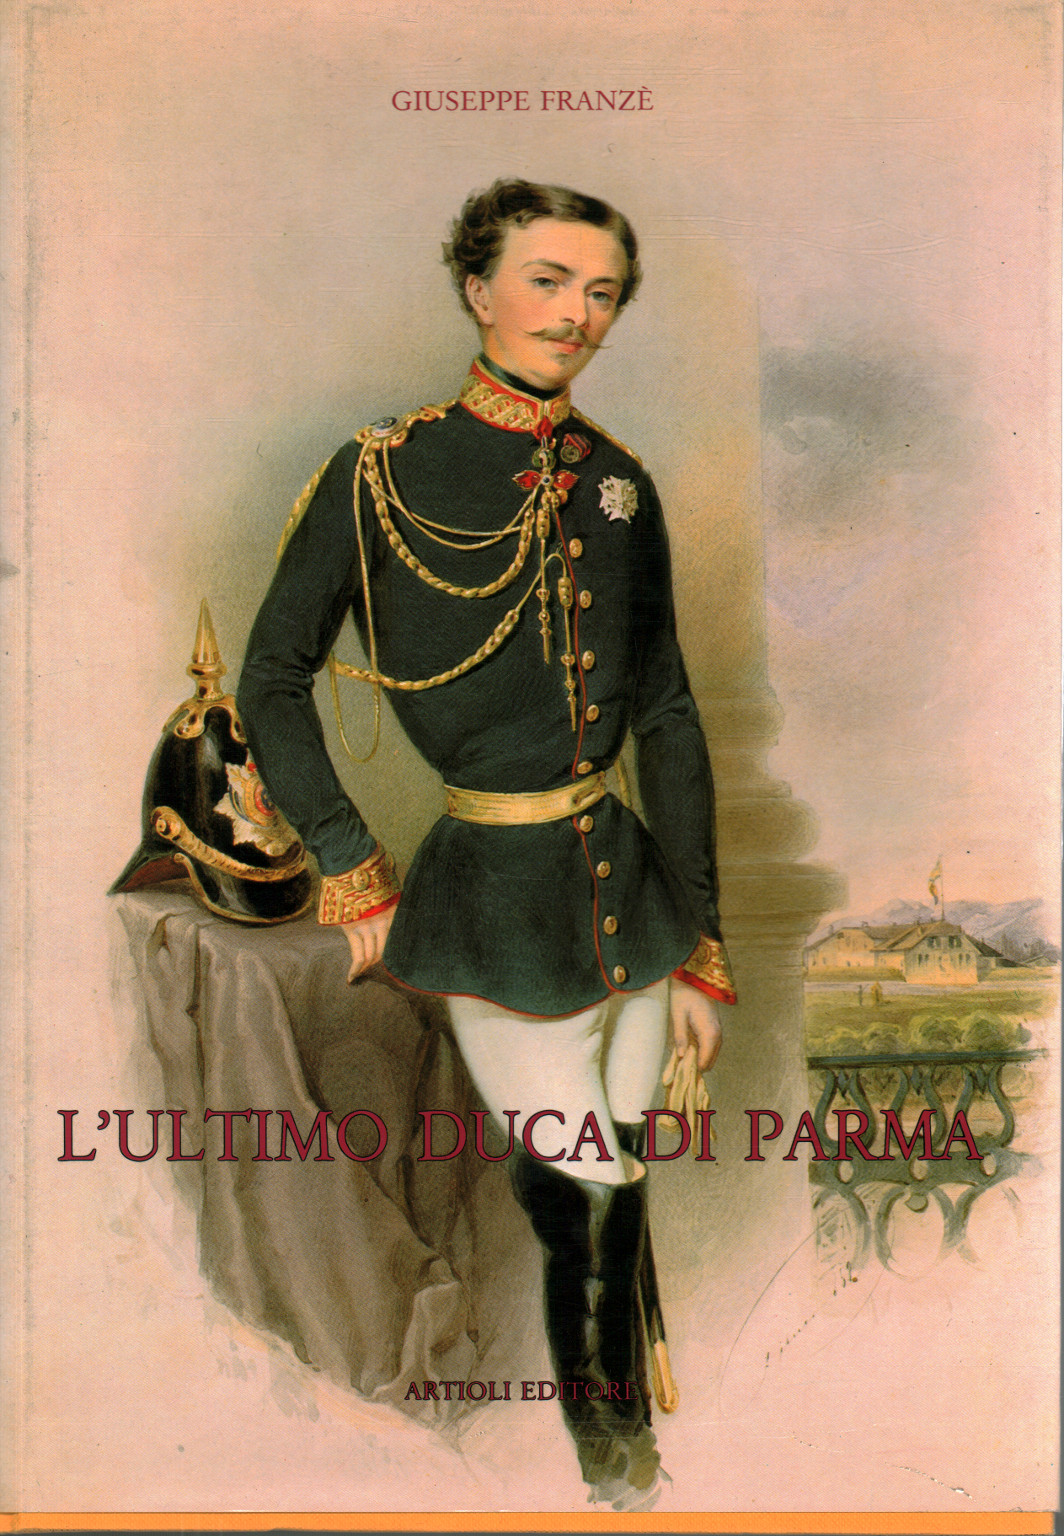 The last Duke of Parma, Giuseppe Franzè